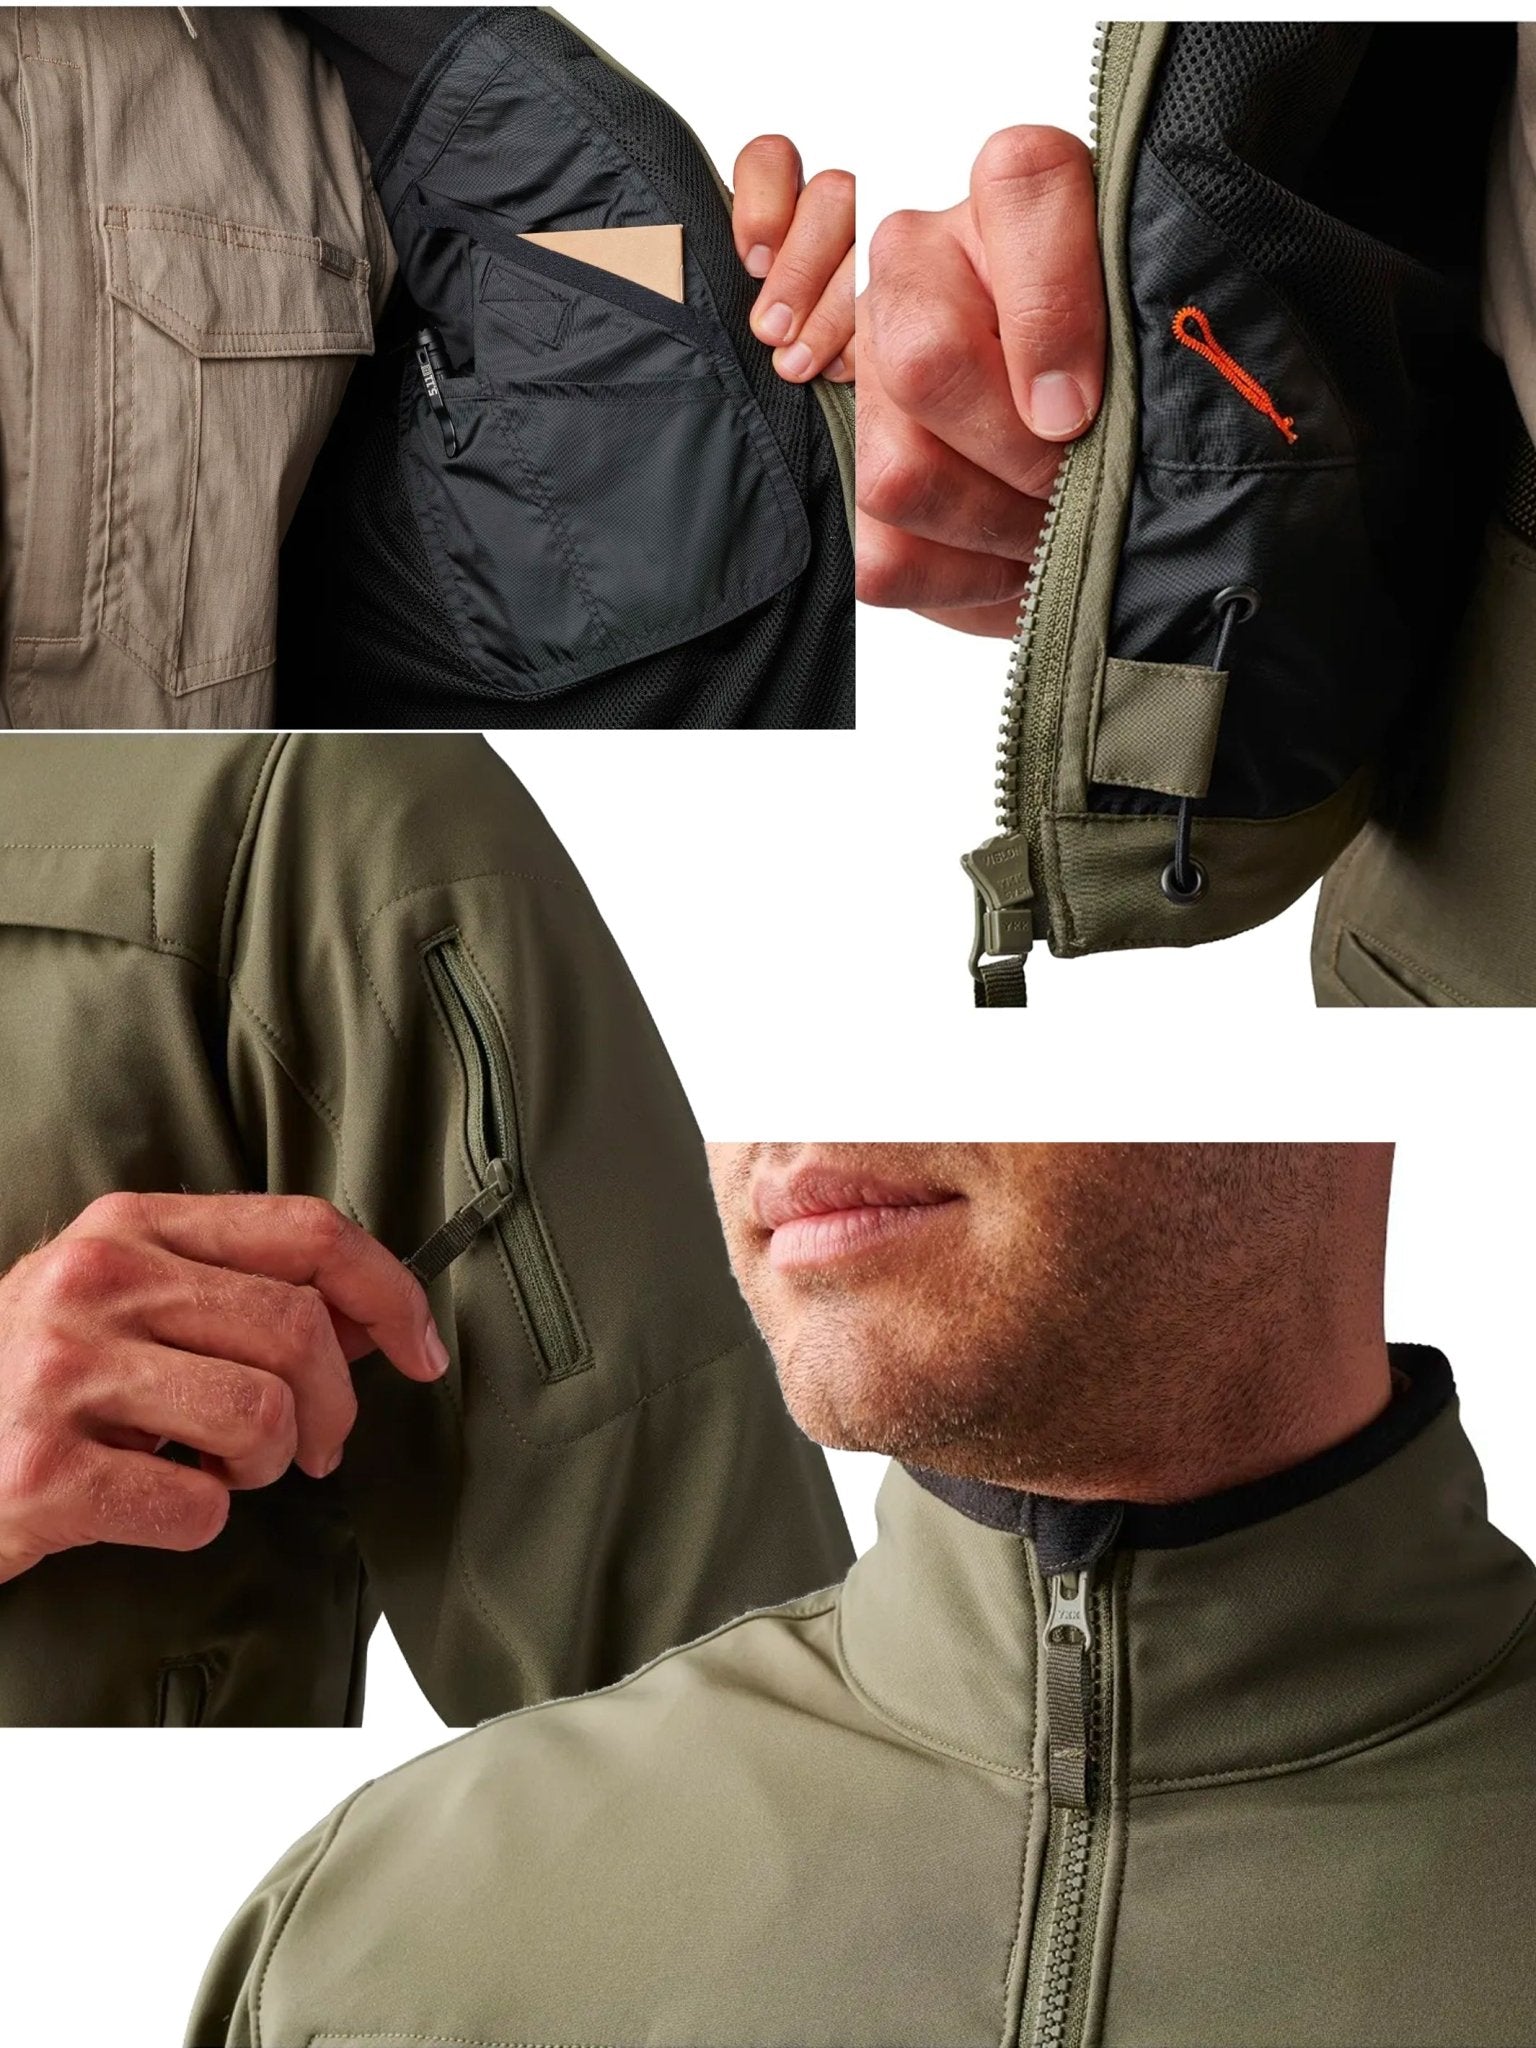 Chameleon Softshell Jacket 2.0: Waterproof & Breathable